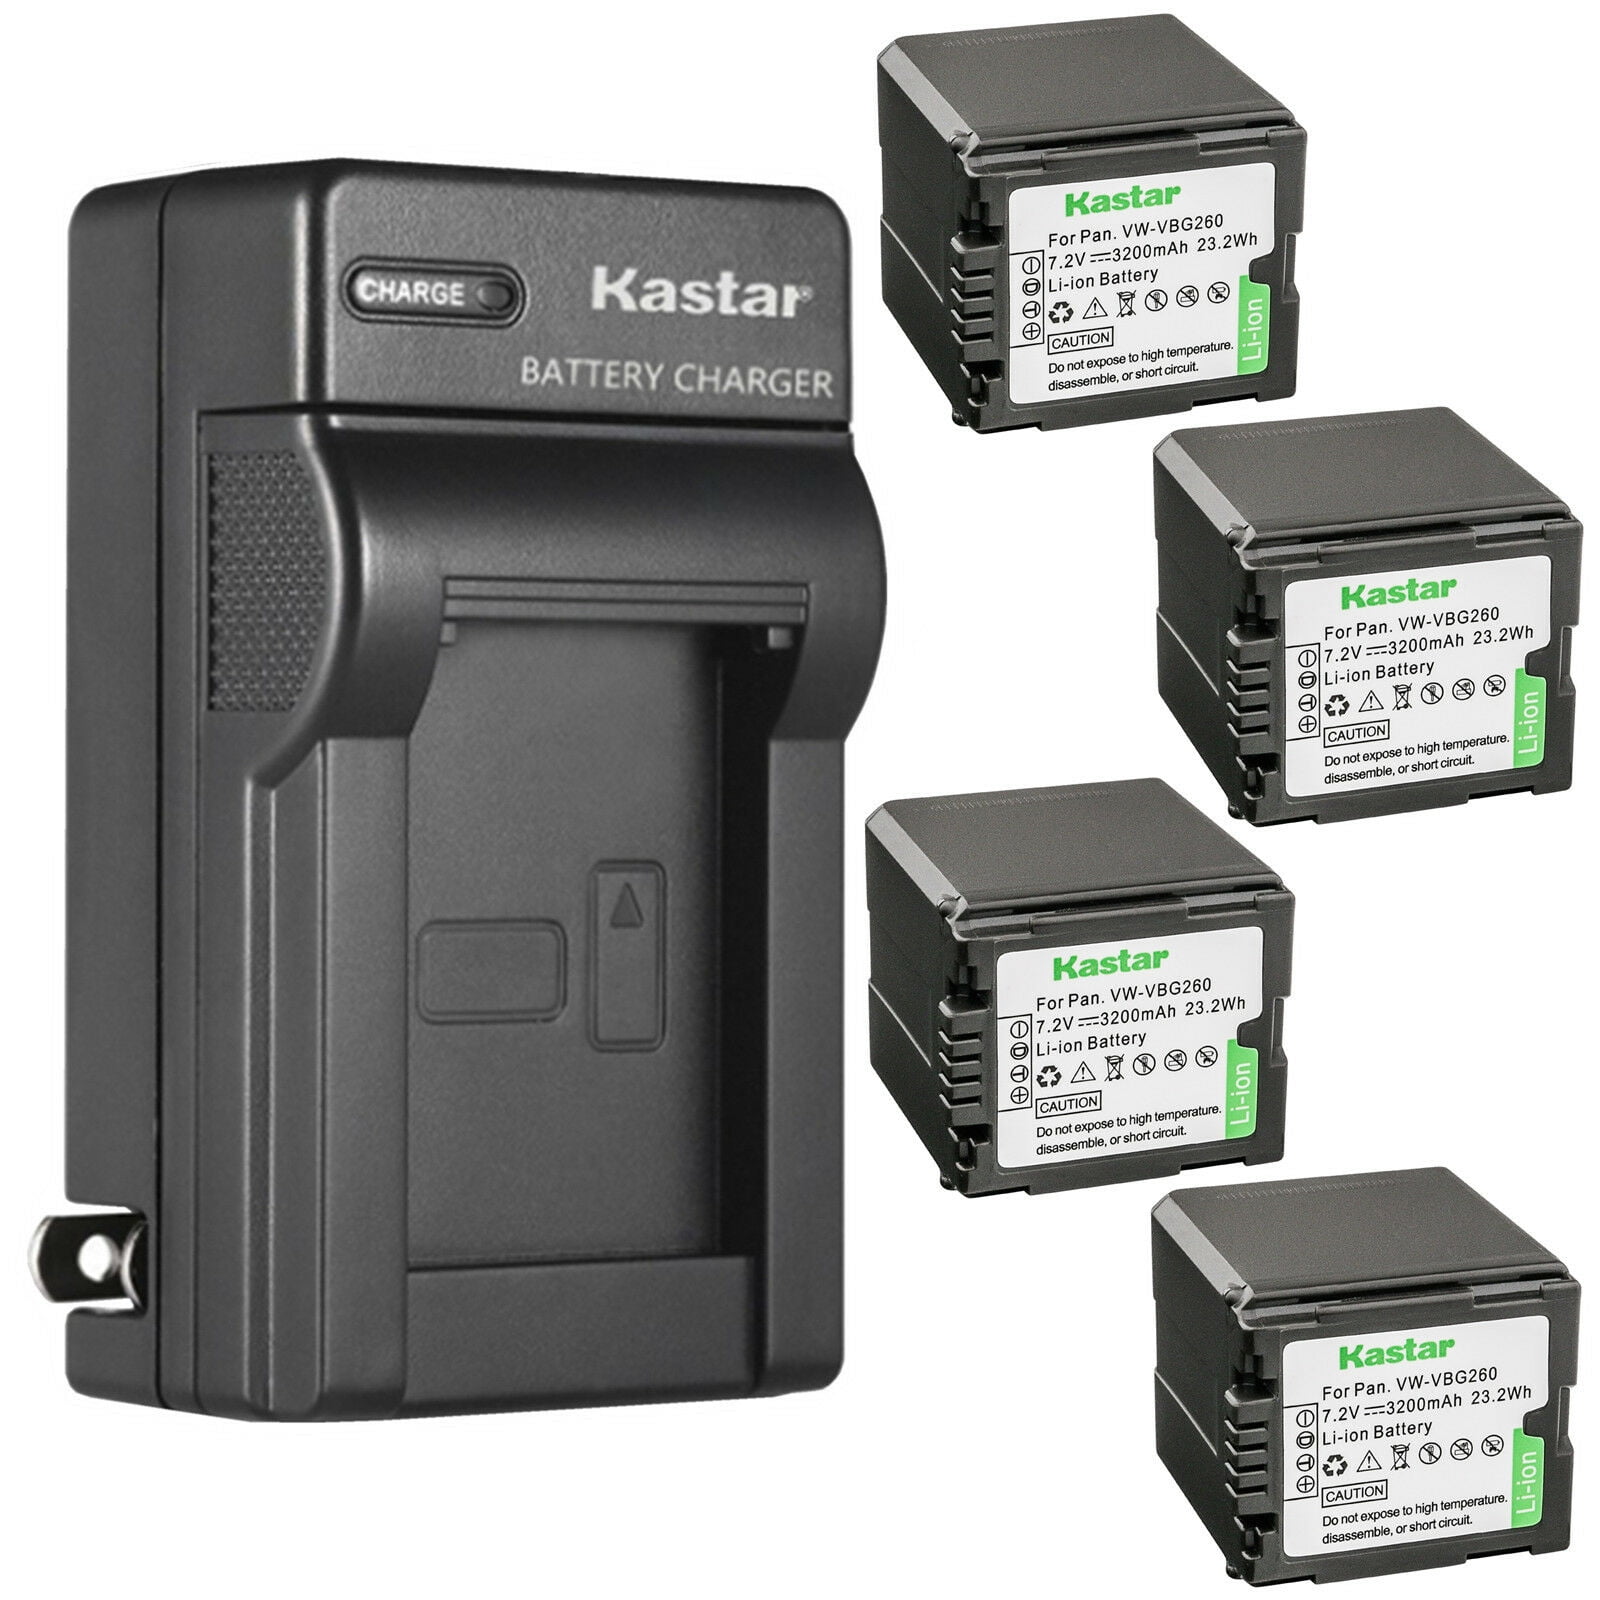 Aquarium Vooruit mannelijk Kastar 4-Pack VW-VBG260 Battery and AC Wall Charger Replacement for  Panasonic HDC-DX1, HDC-DX1EG-S, HDC-DX1GK, HDC-DX1P, HDC-DX1-S, HDC-DX3,  HDC-HS9, HDC-HS9EG-S, HDC-HS9GK, HDC-HS20, HDC-HS20K - Walmart.com